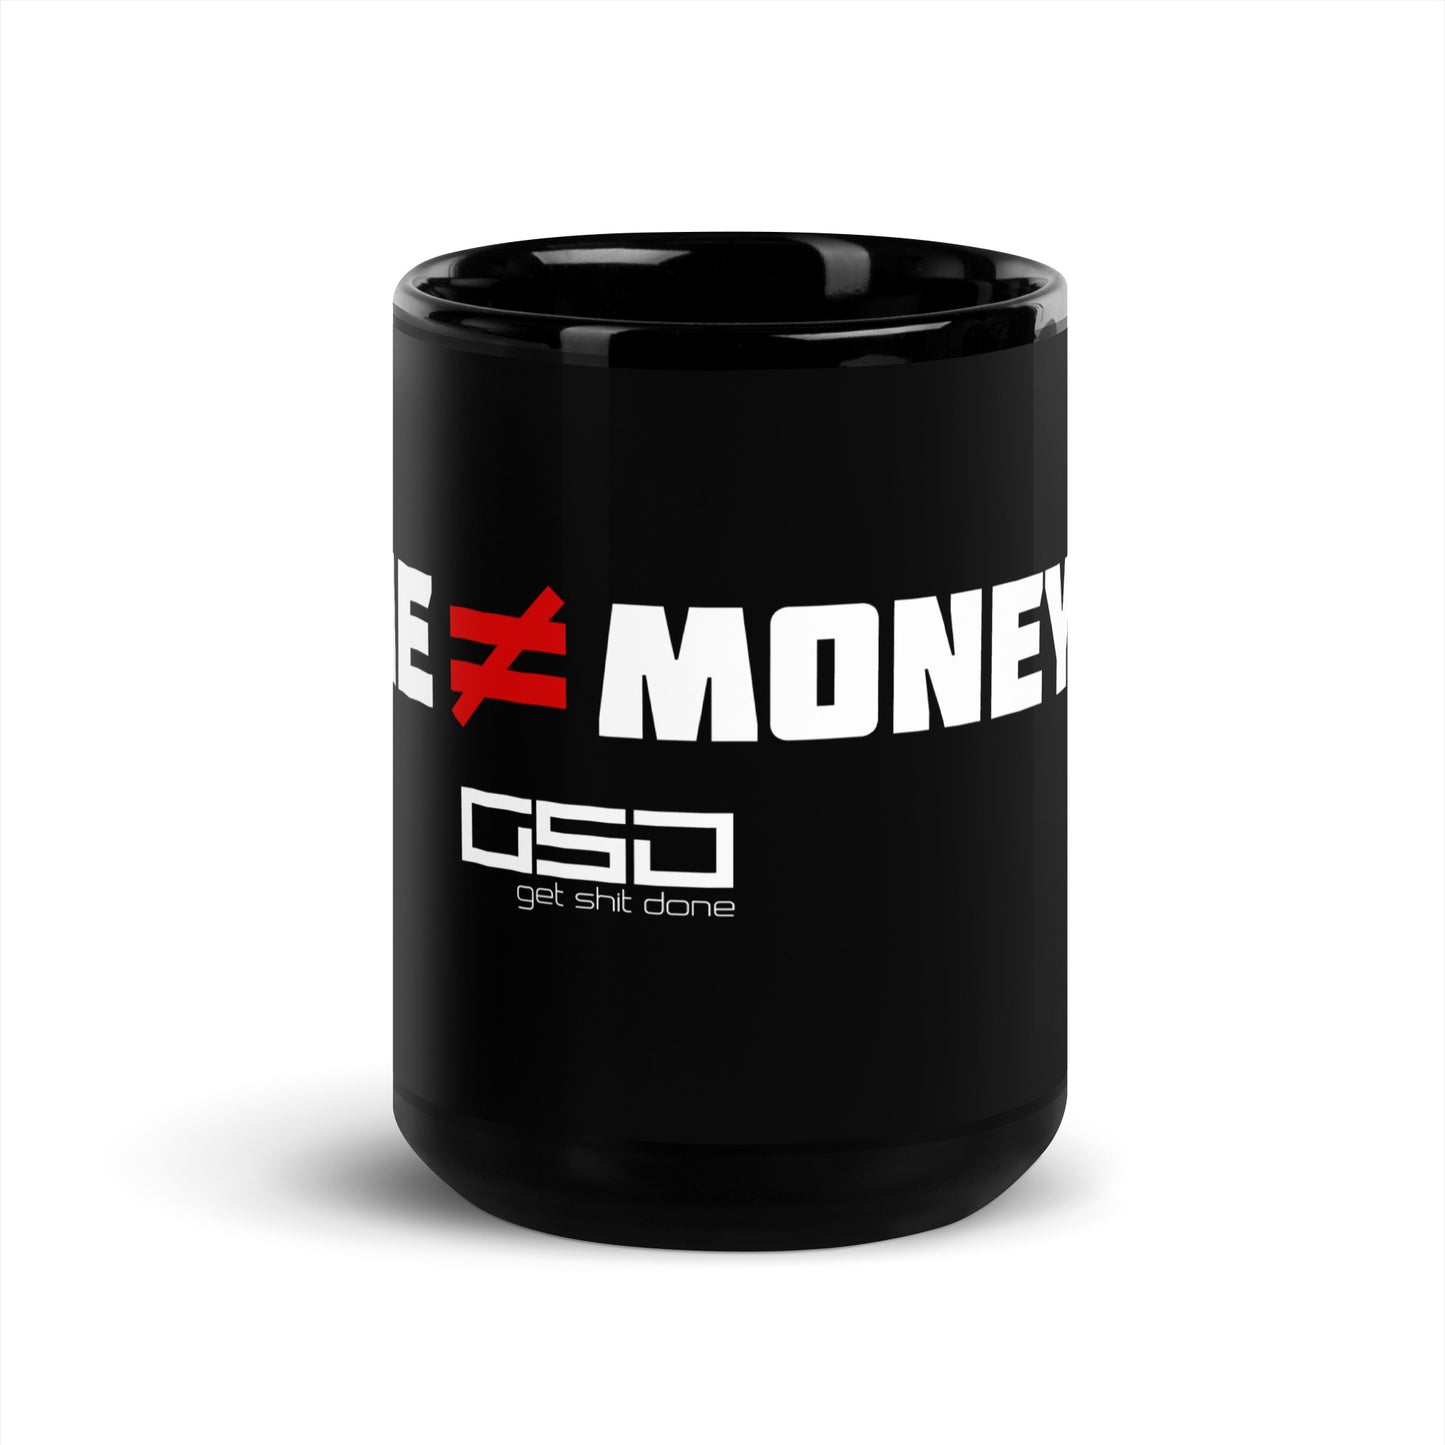 Time ≠ Money-Black Glossy Mug